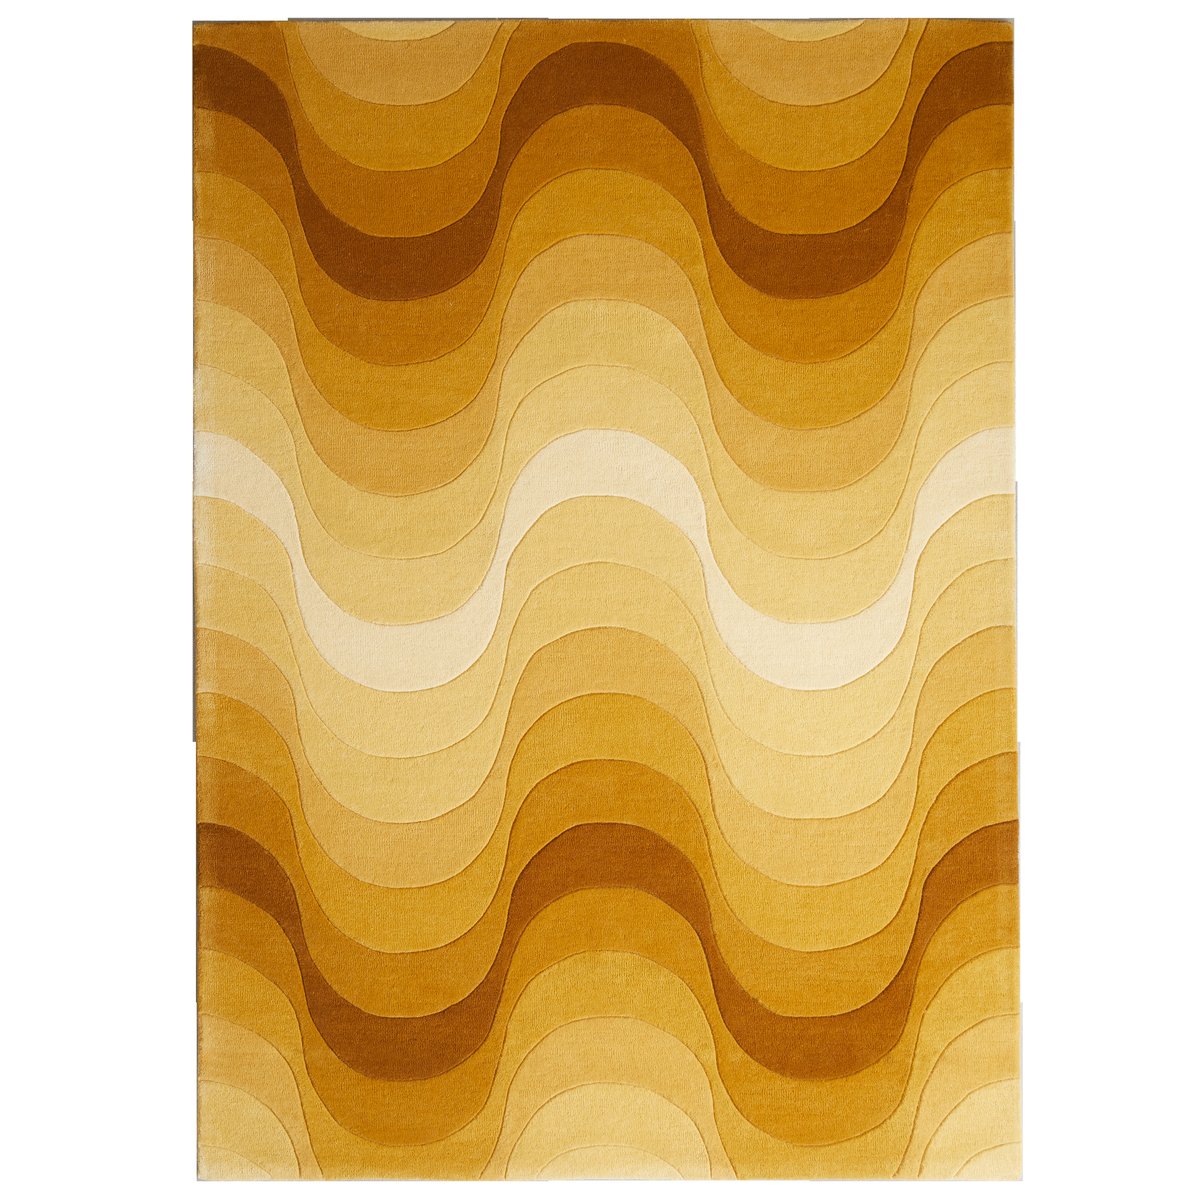 Verpan Wave vloerkleed 170x240 cm Geel